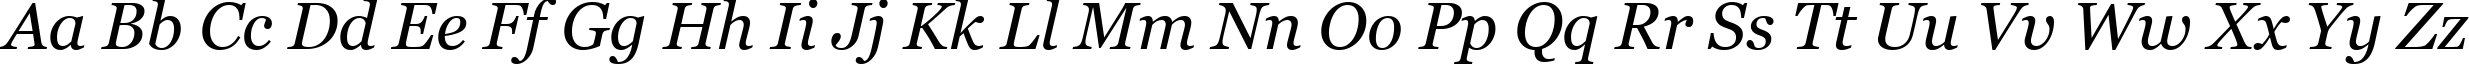 Пример написания английского алфавита шрифтом Georgia Italic